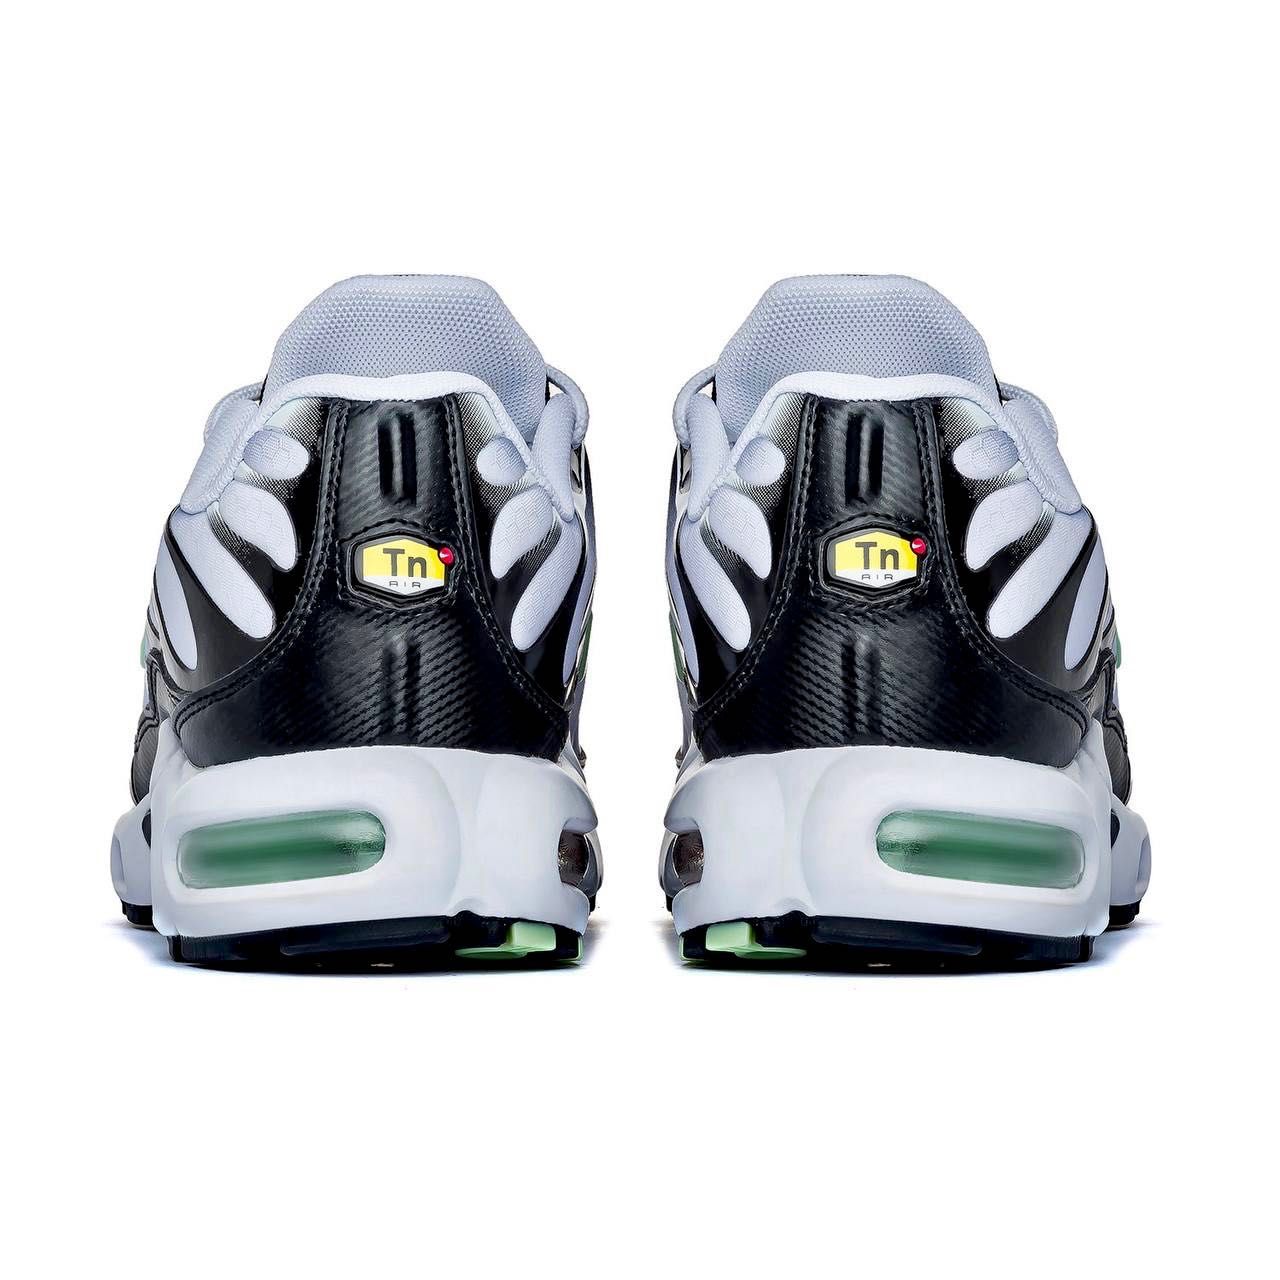 Мужские кроссовки Nike Air Max TN White Silver. Размеры 40-45